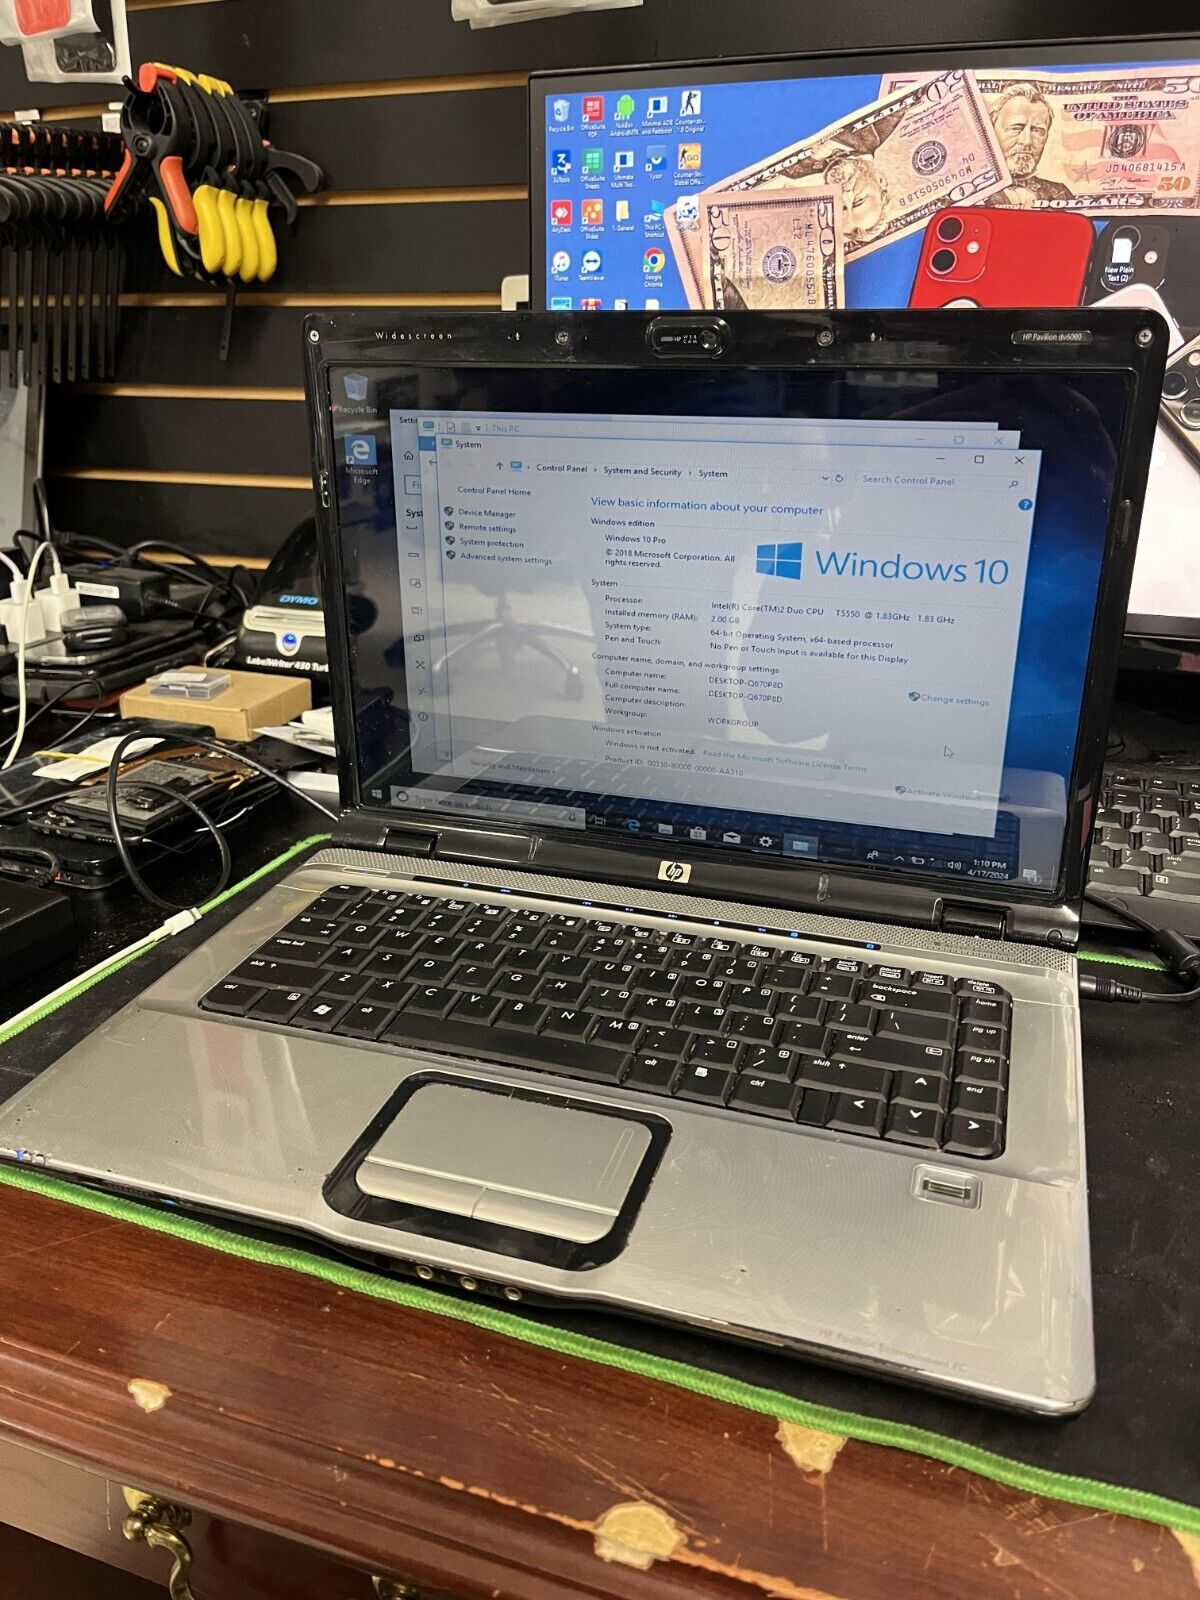 HP Pavilion dv6000 Series Laptop